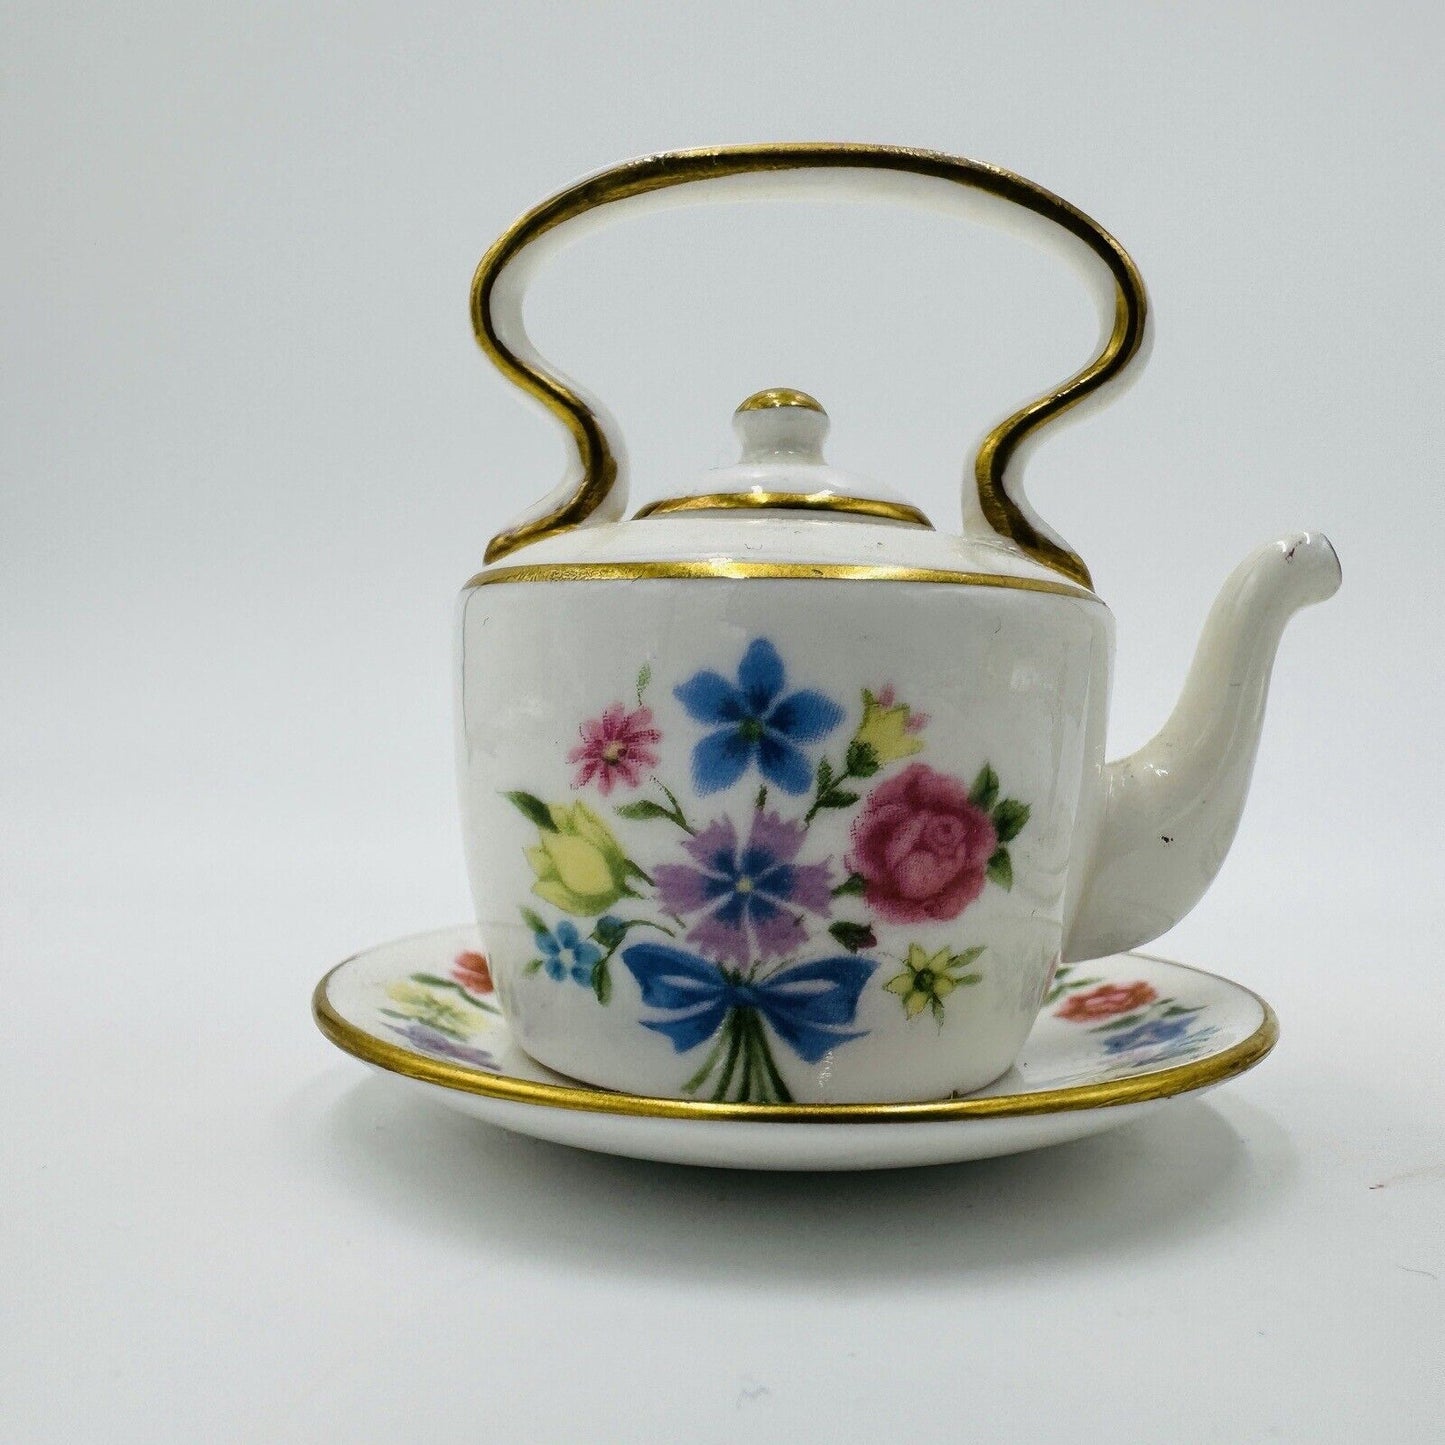 Vintage Spode Miniatures Teapot Plate 2 Tier Serving Tray Miniatures 2” Rare